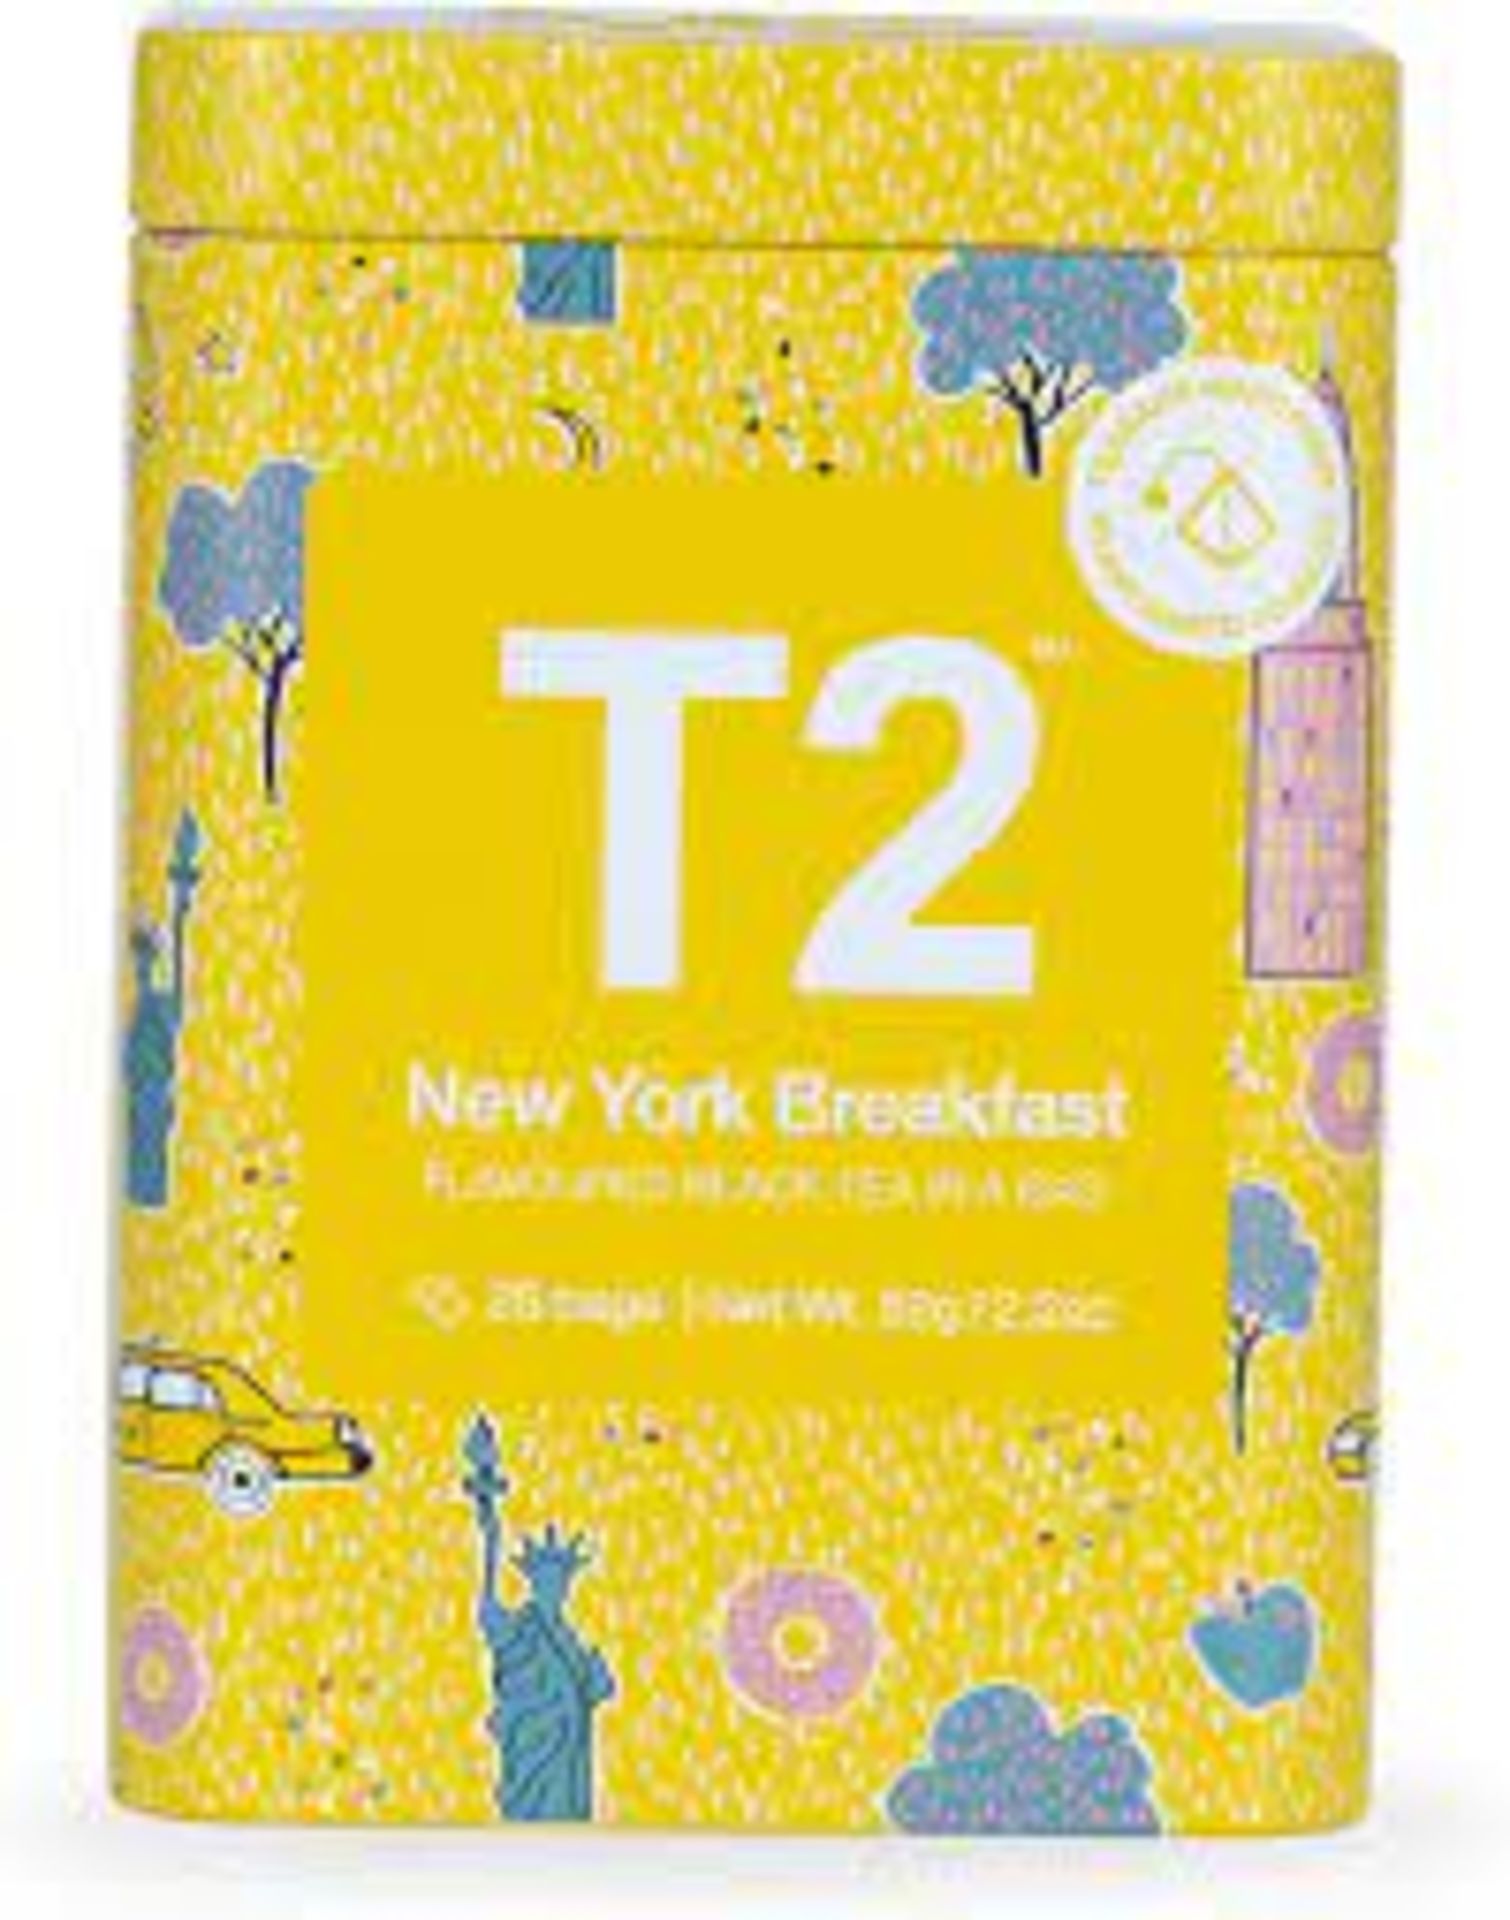 RRP £977 (Approx. Count 74) spW37c7810e (1) 36 x T2 Tea - New York Breakfast Black Tea, Black Tea